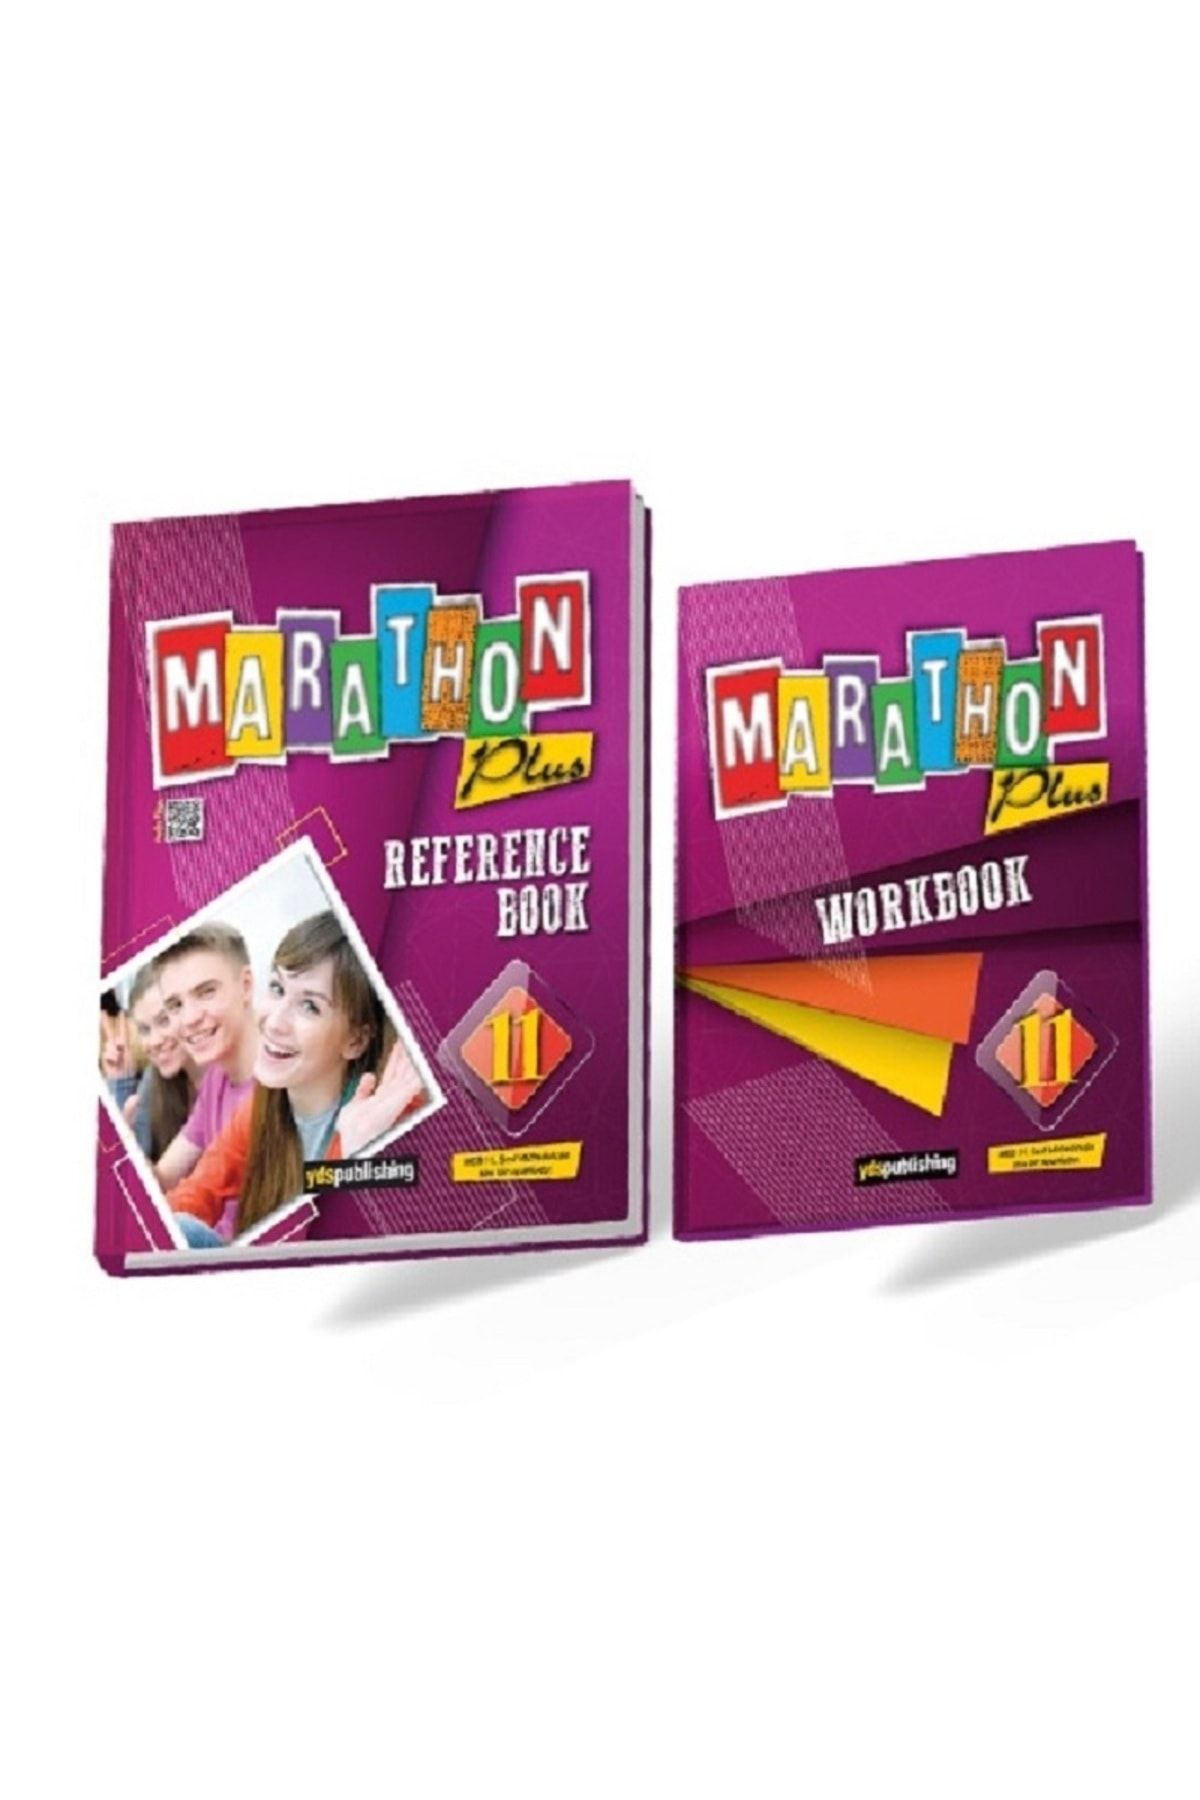 yds publishing New Edition Marathon Plus 11 Reference Book/ Workbook